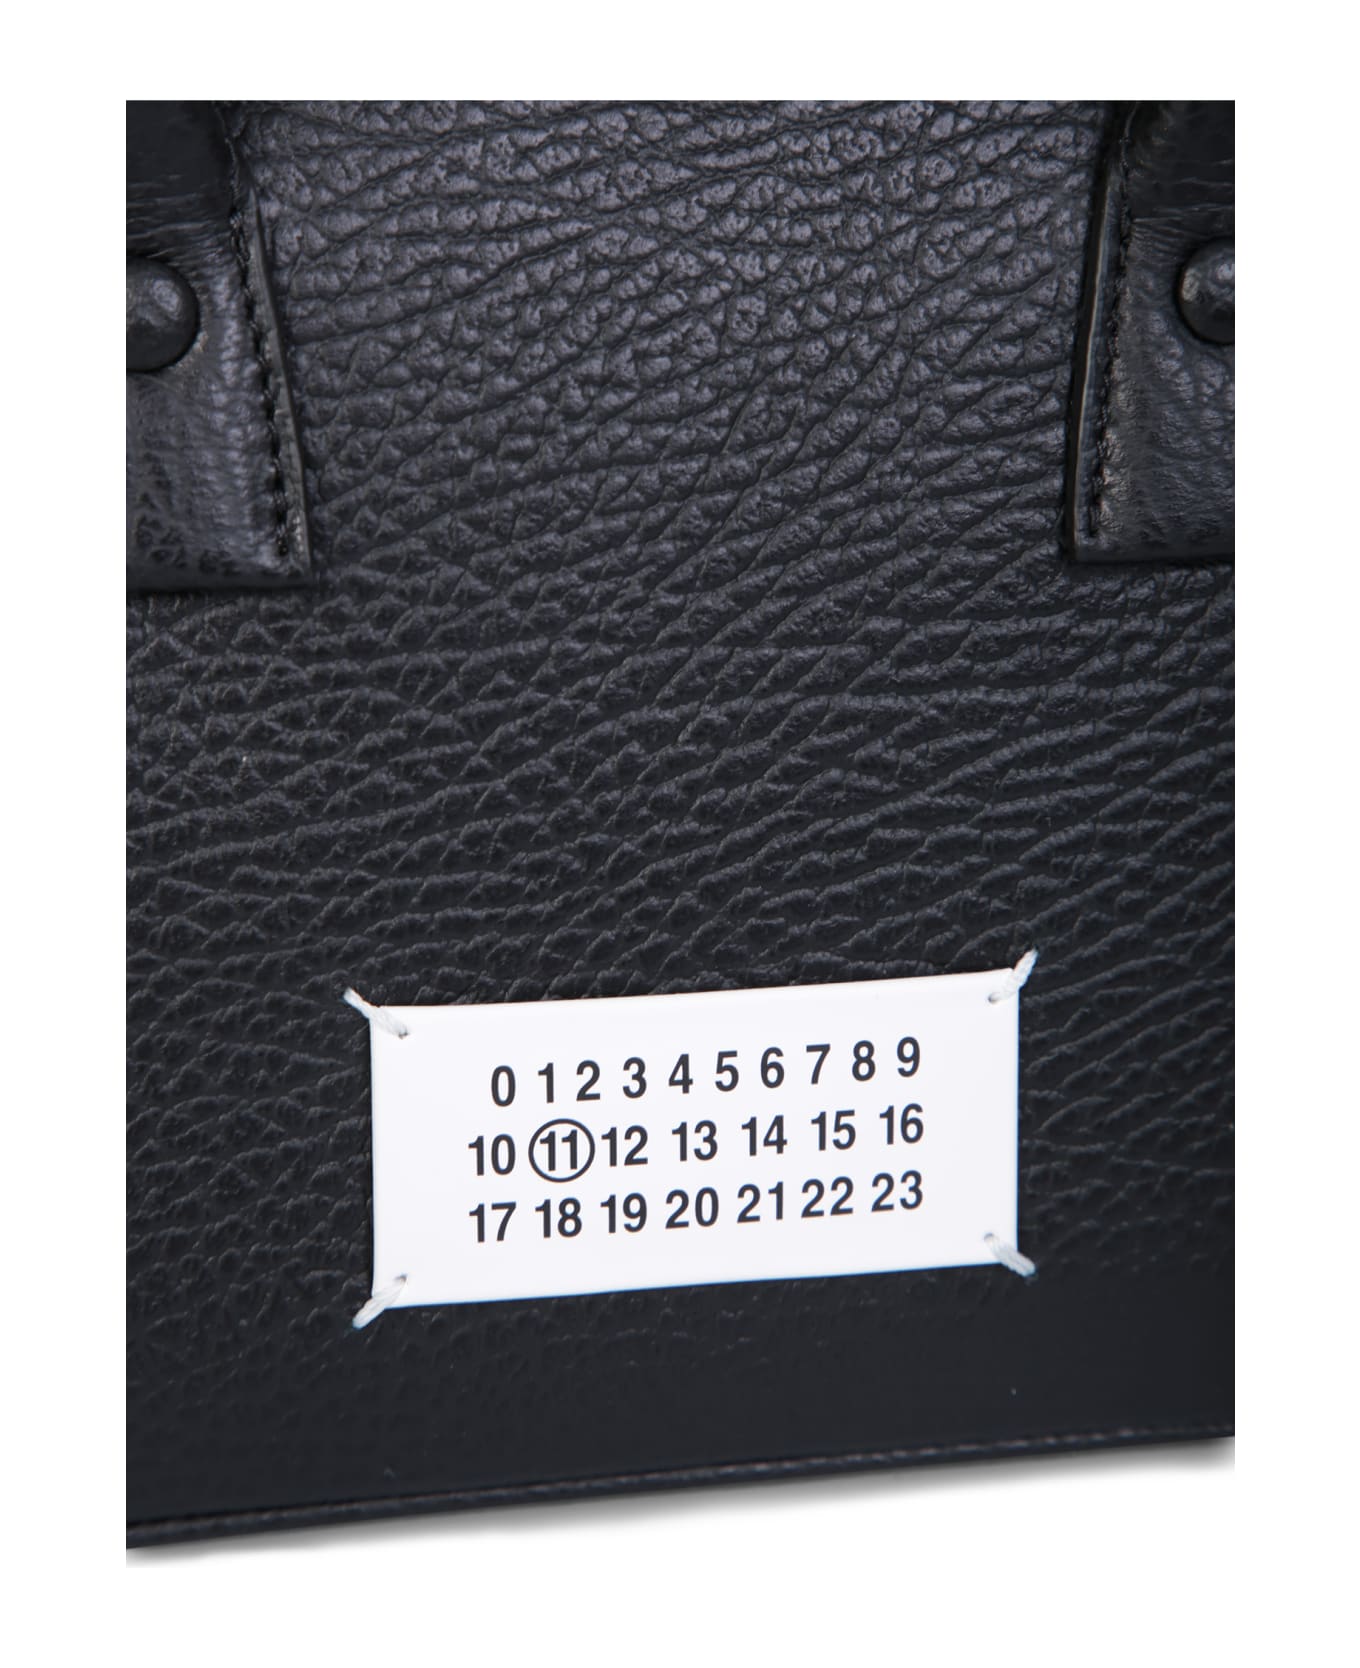 Maison Margiela 5ac Mini Drawstring Bag - Black